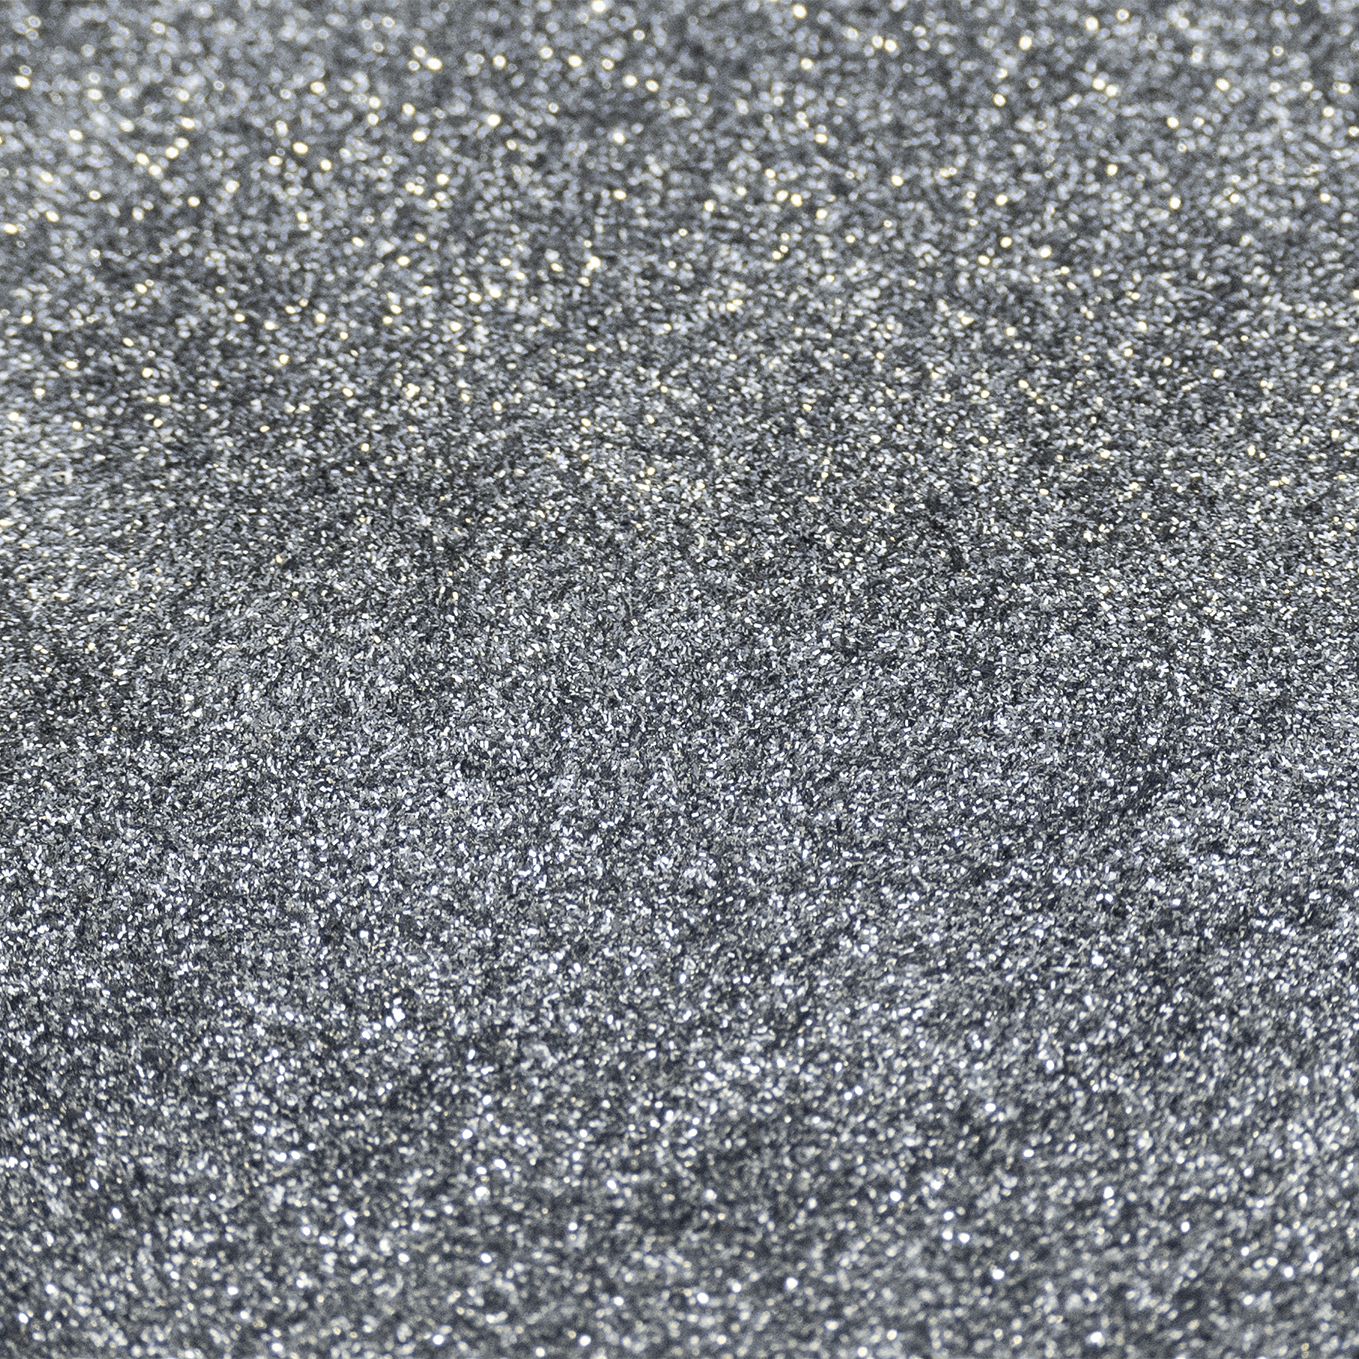 Silver 100g - Resi Glitter Fine